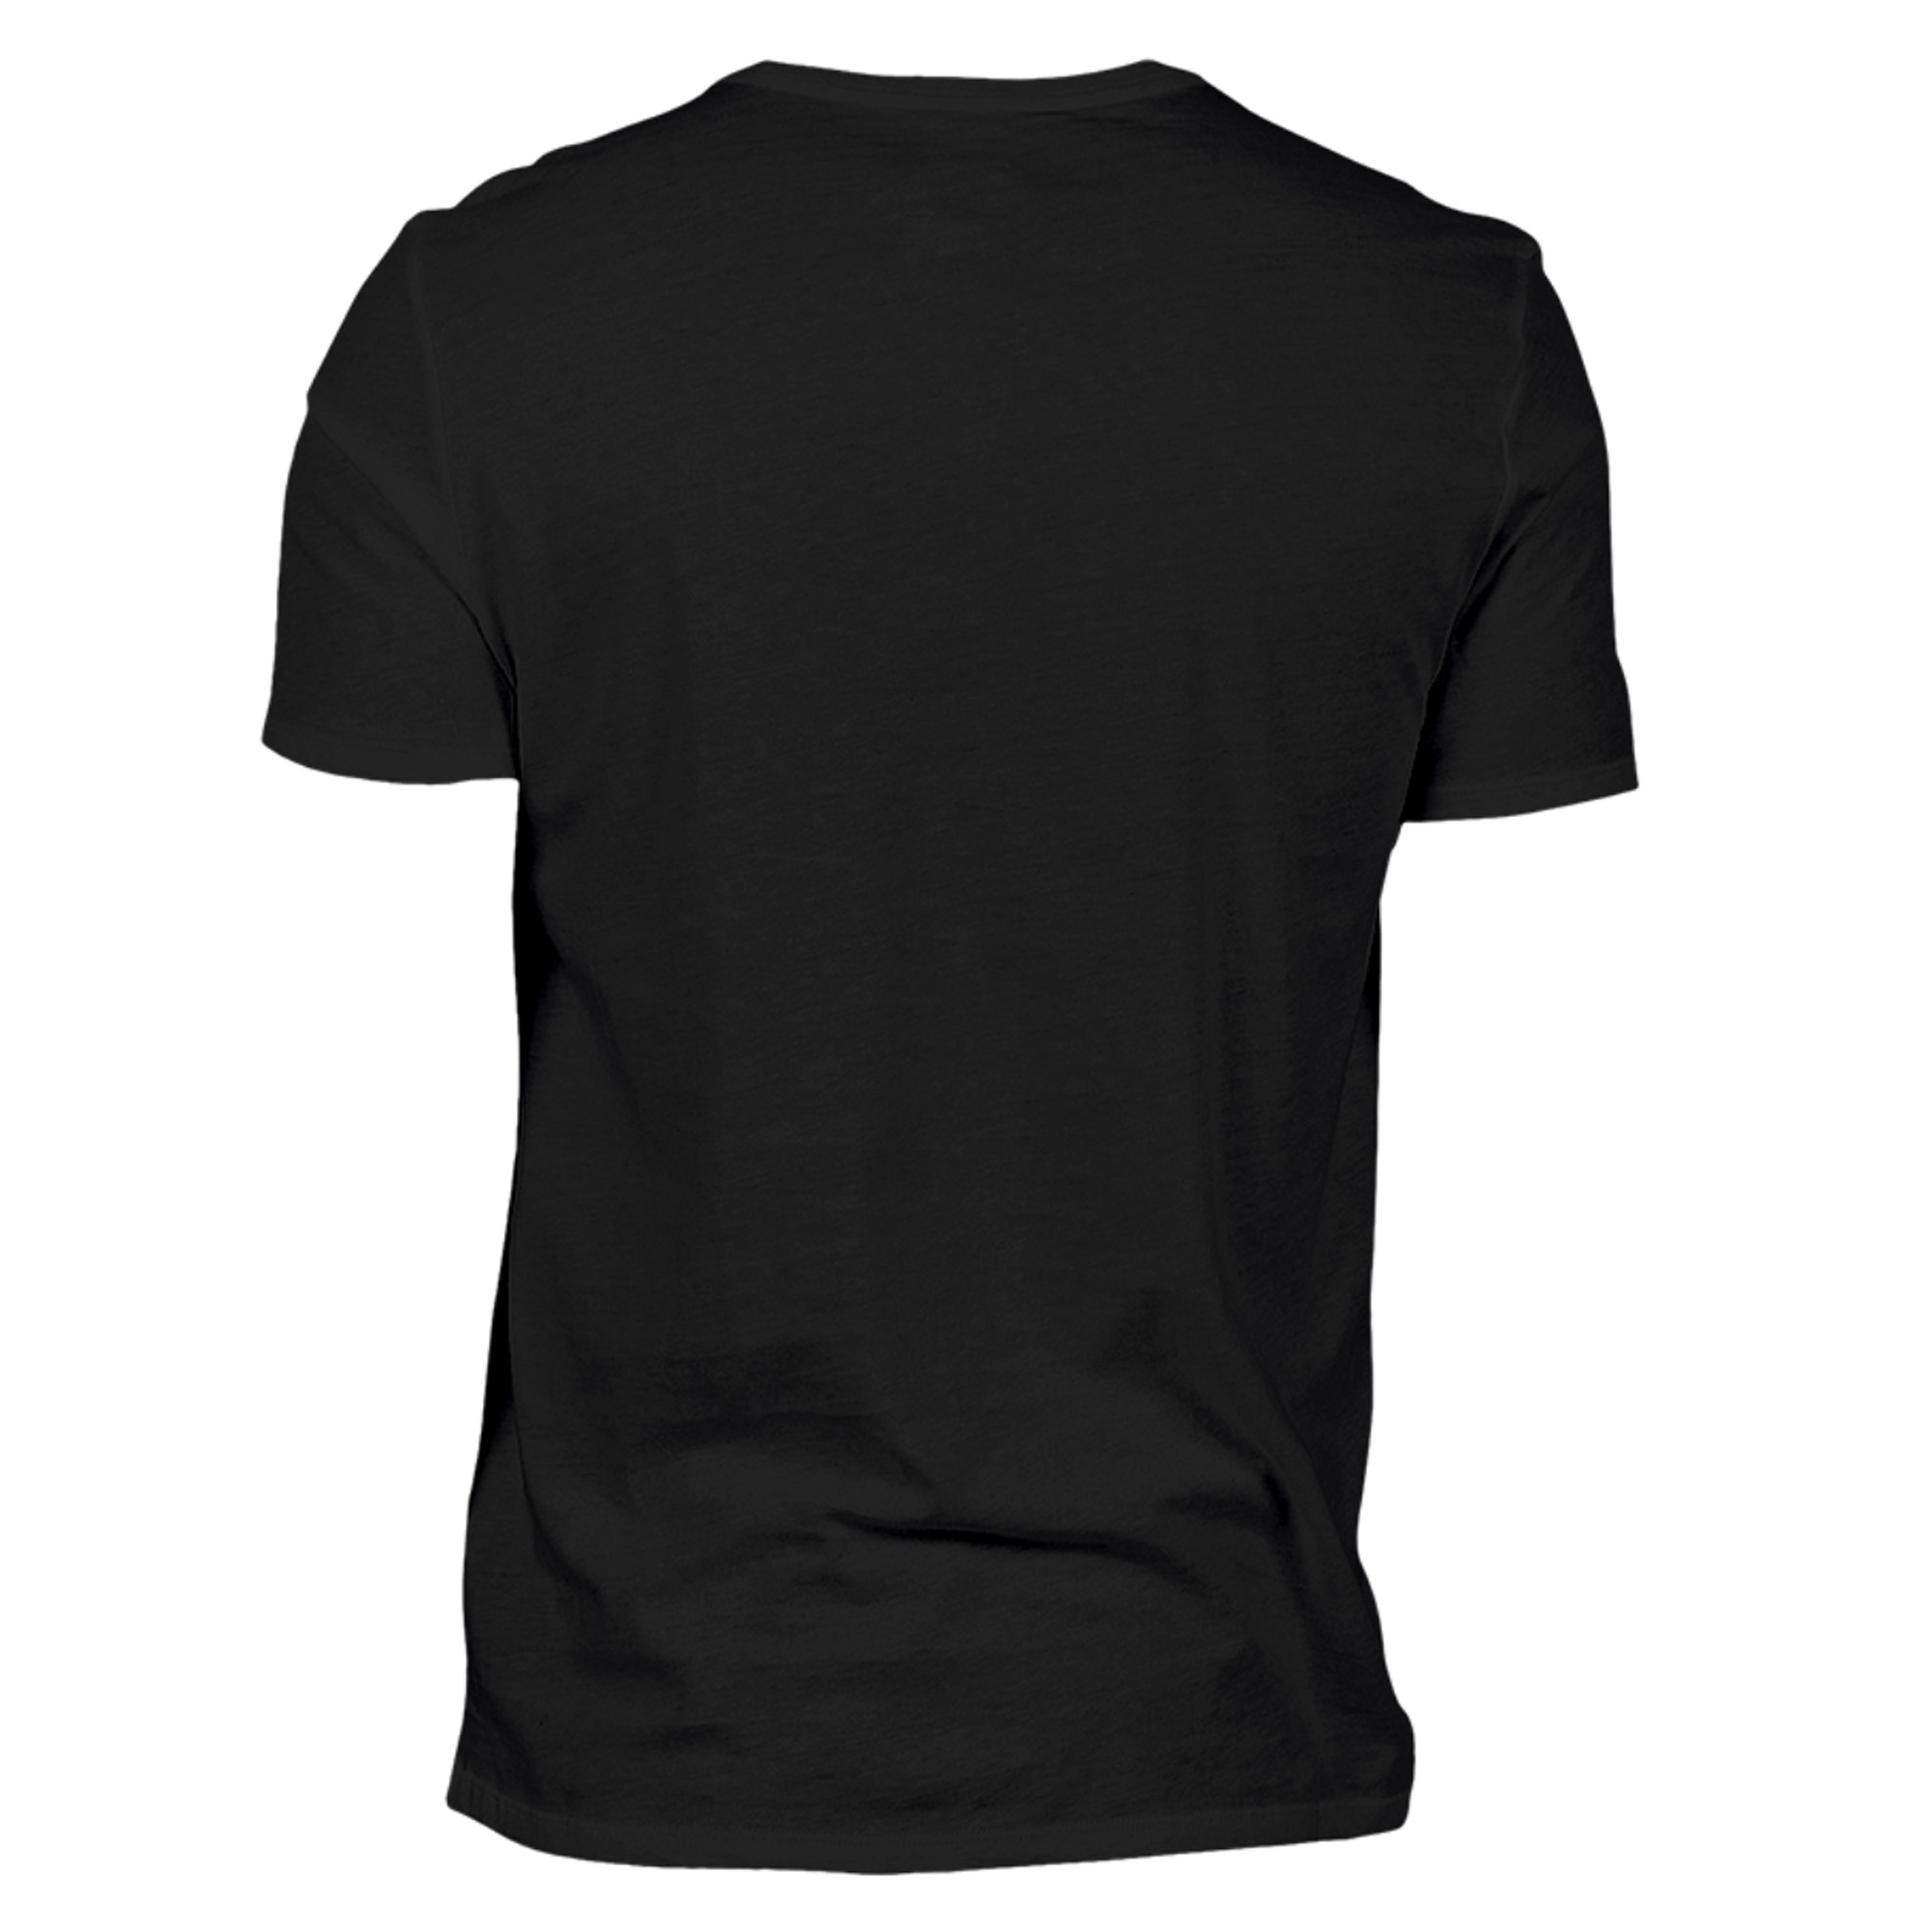 Wiesenaue T-Shirt »Original Product«